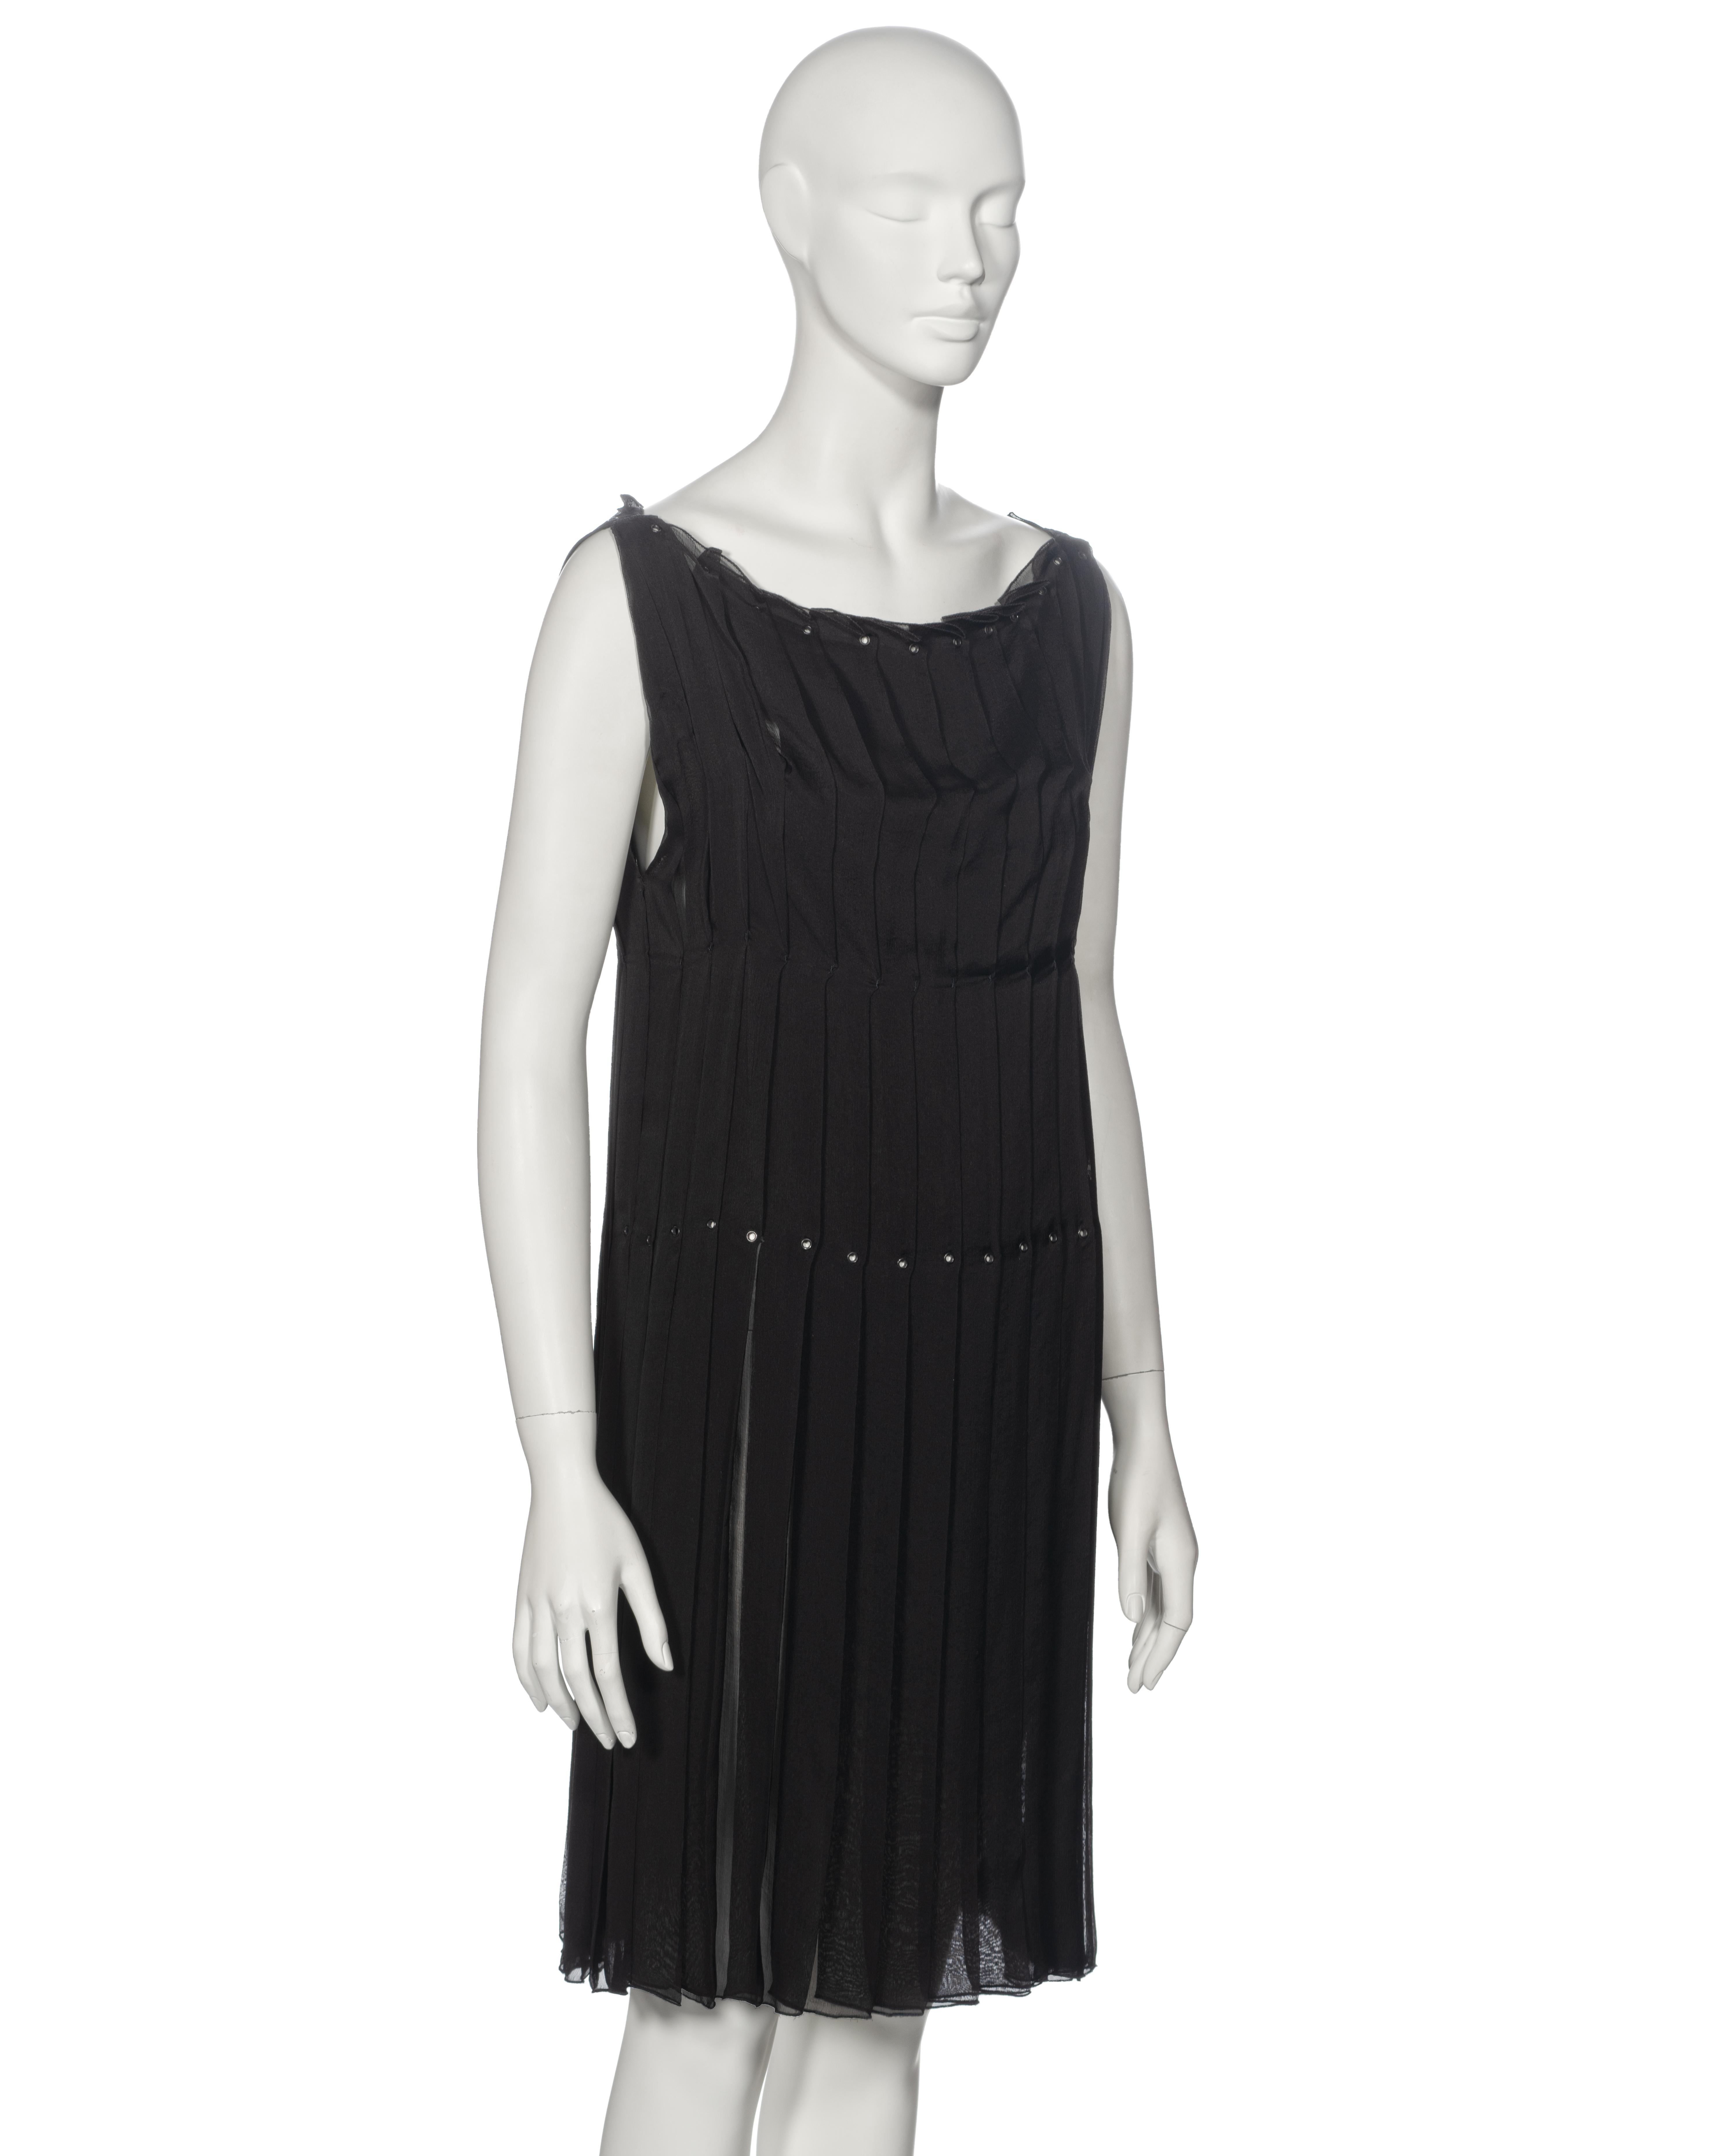 Prada by Miuccia Prada Black Silk Chiffon Box Pleated Shift Dress, ss 2000 For Sale 2